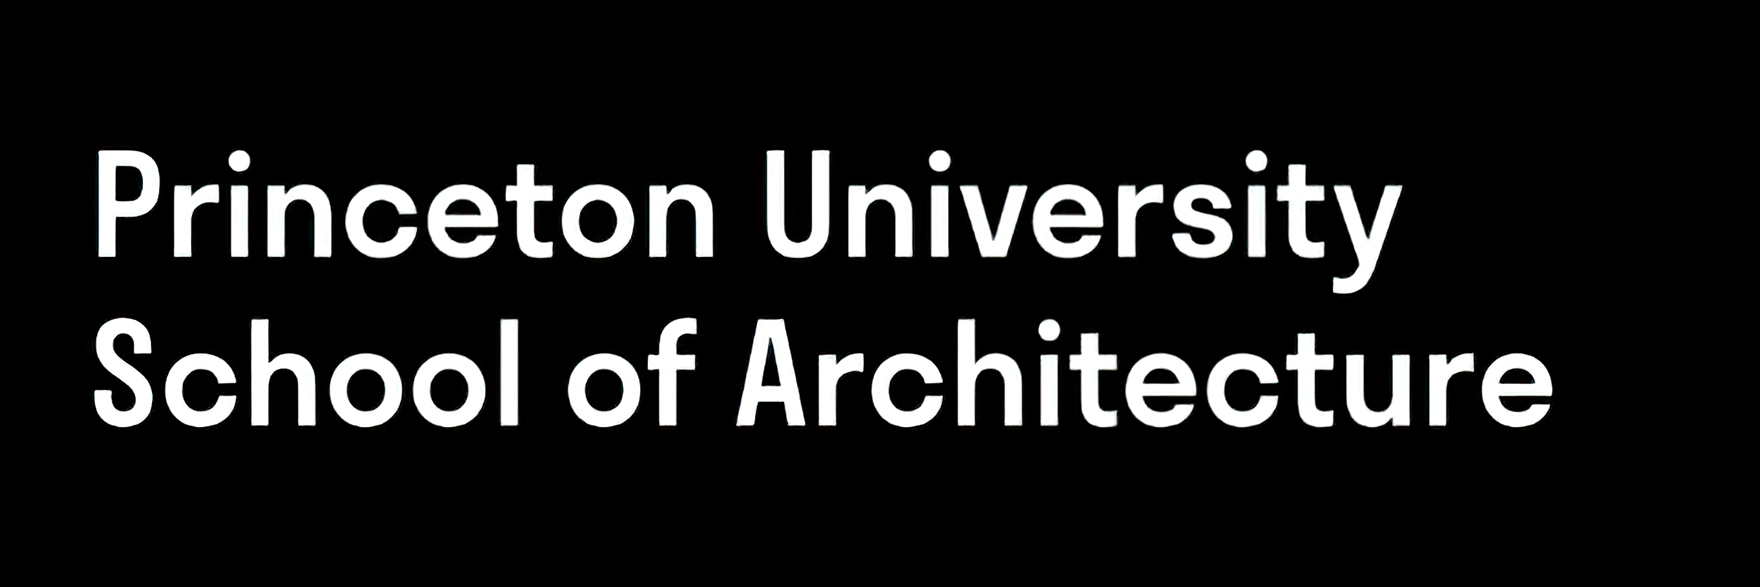 PU School of Architecture logo